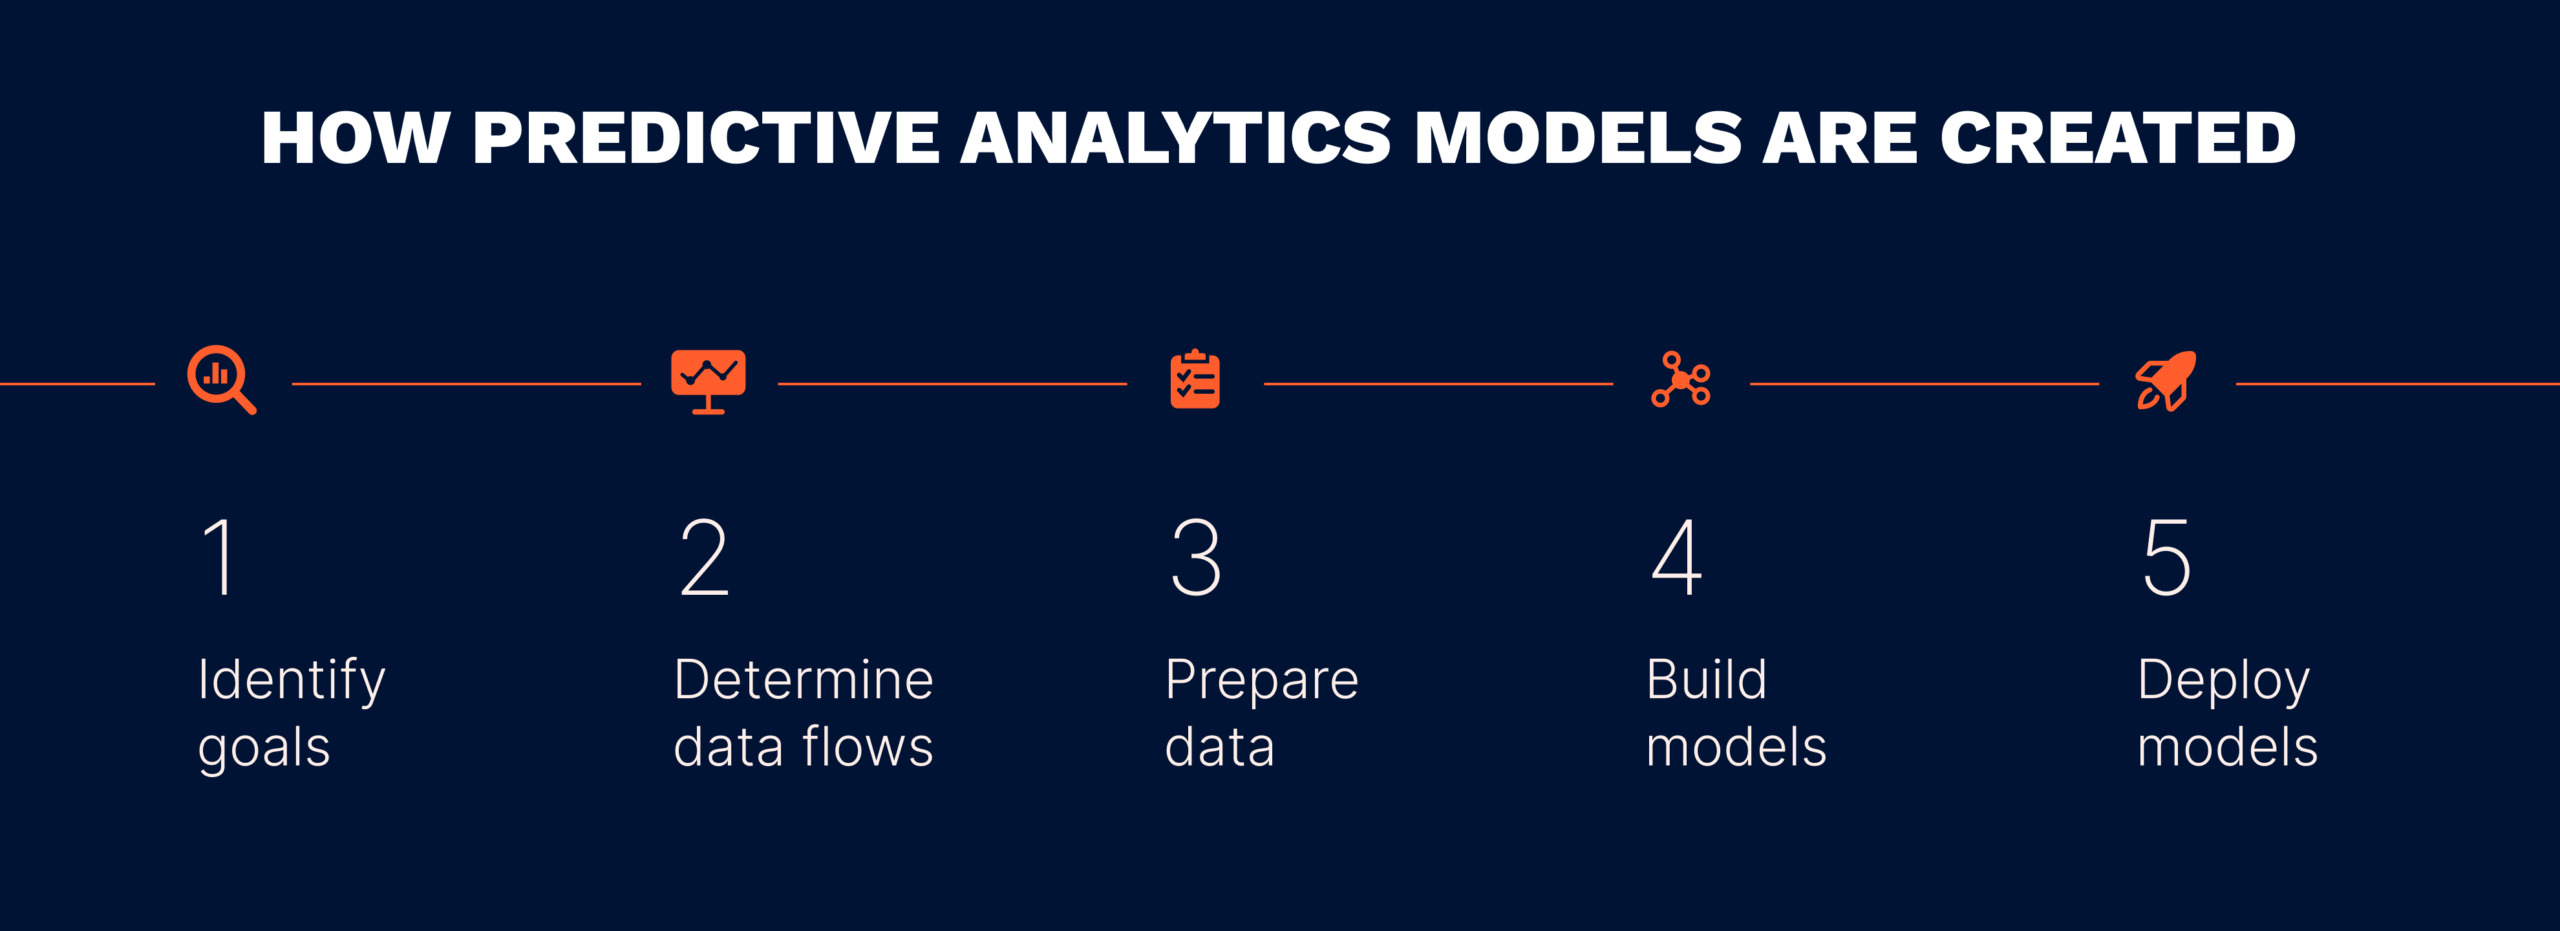 process of creating predictive analytics models